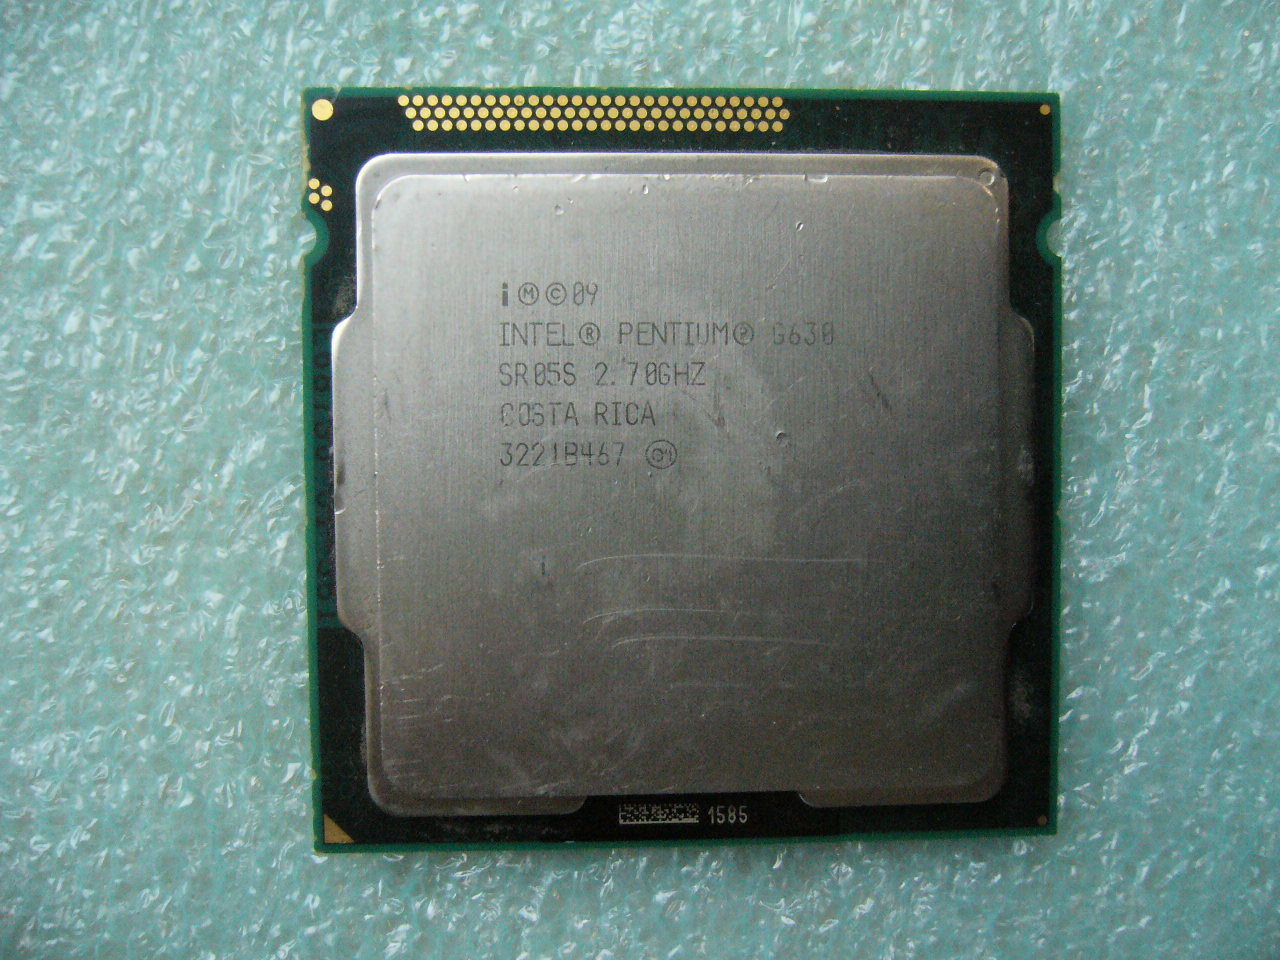 QTY 1x INTEL Pentium CPU G630 2.7GHZ/3MB LGA1155 SR05S